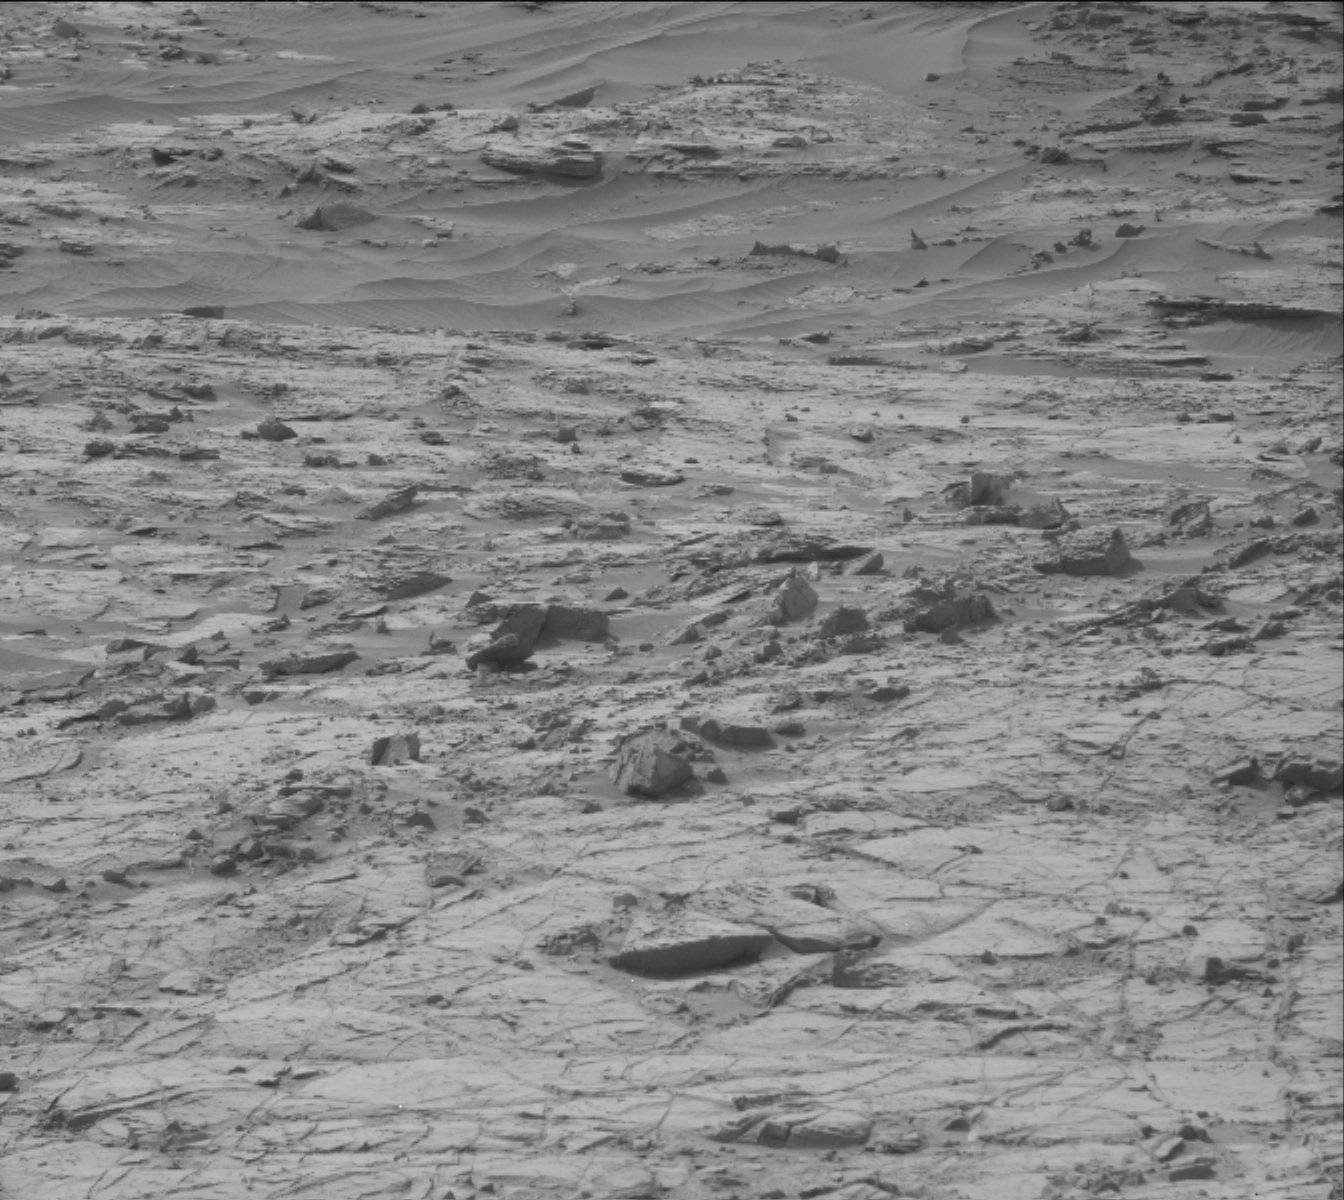 sol-1356-mast-camera-mastcam-nasa-mars-exploration